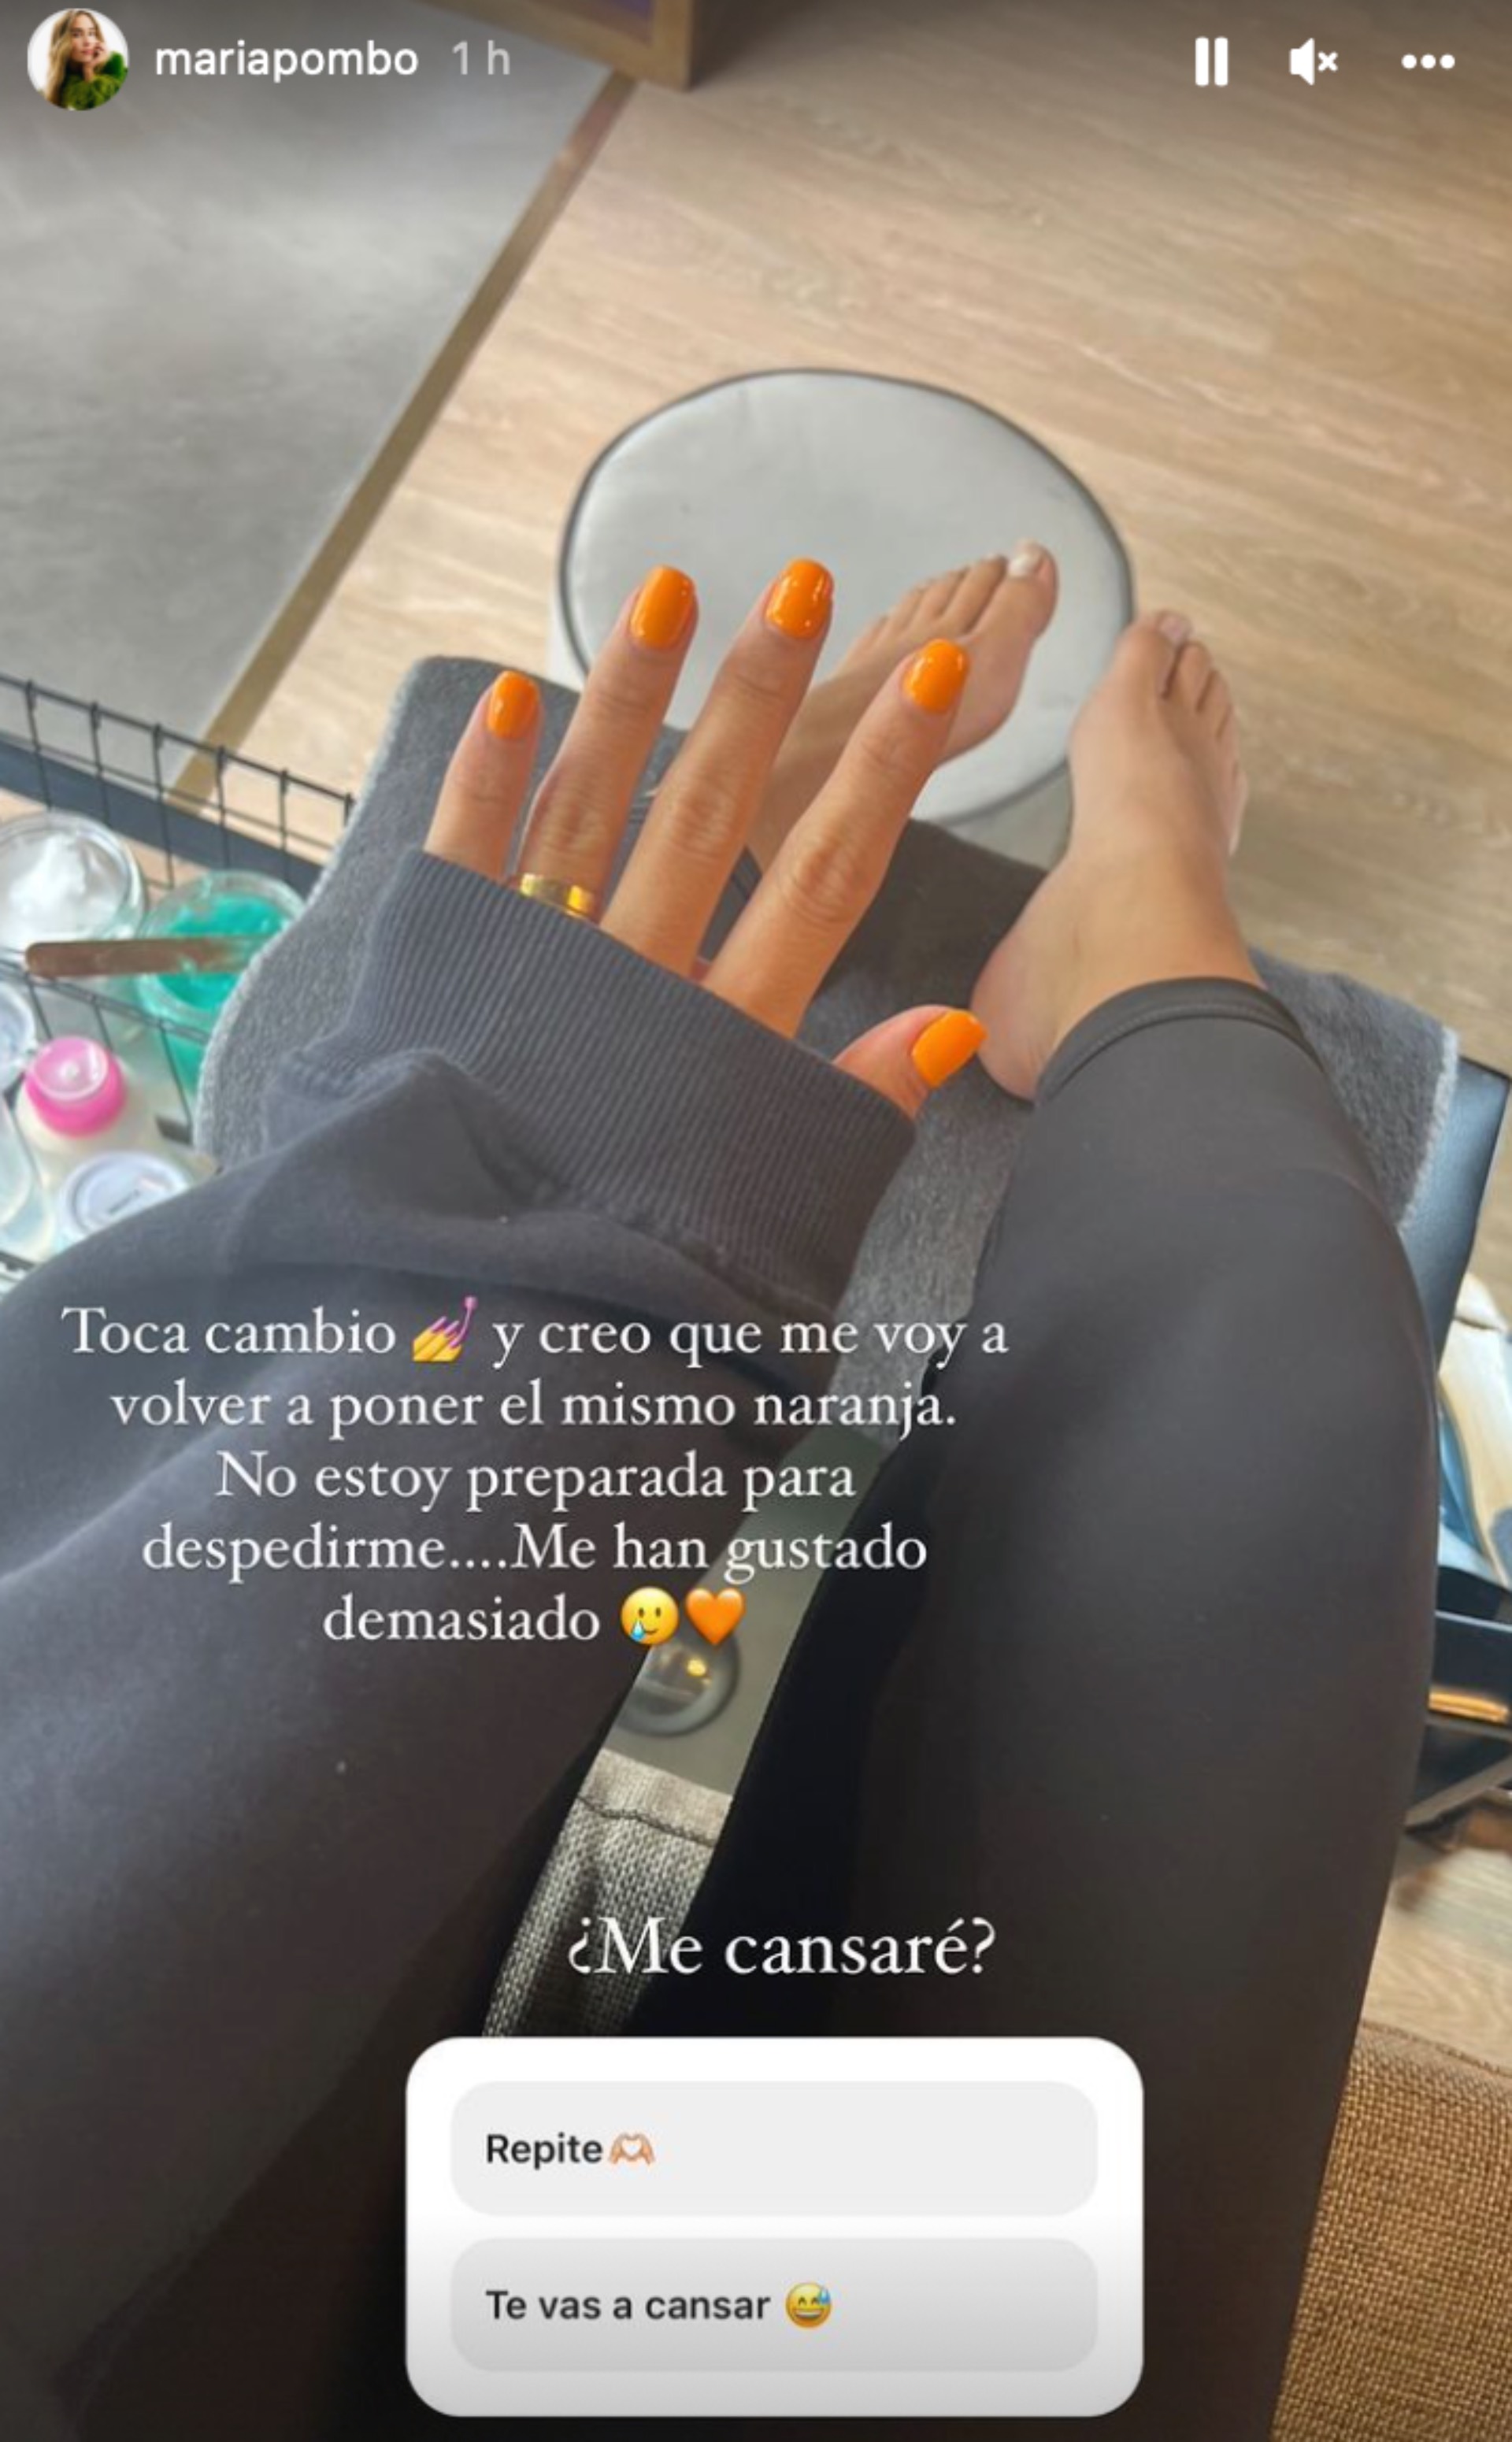 María Pombo uñas flúor naranja